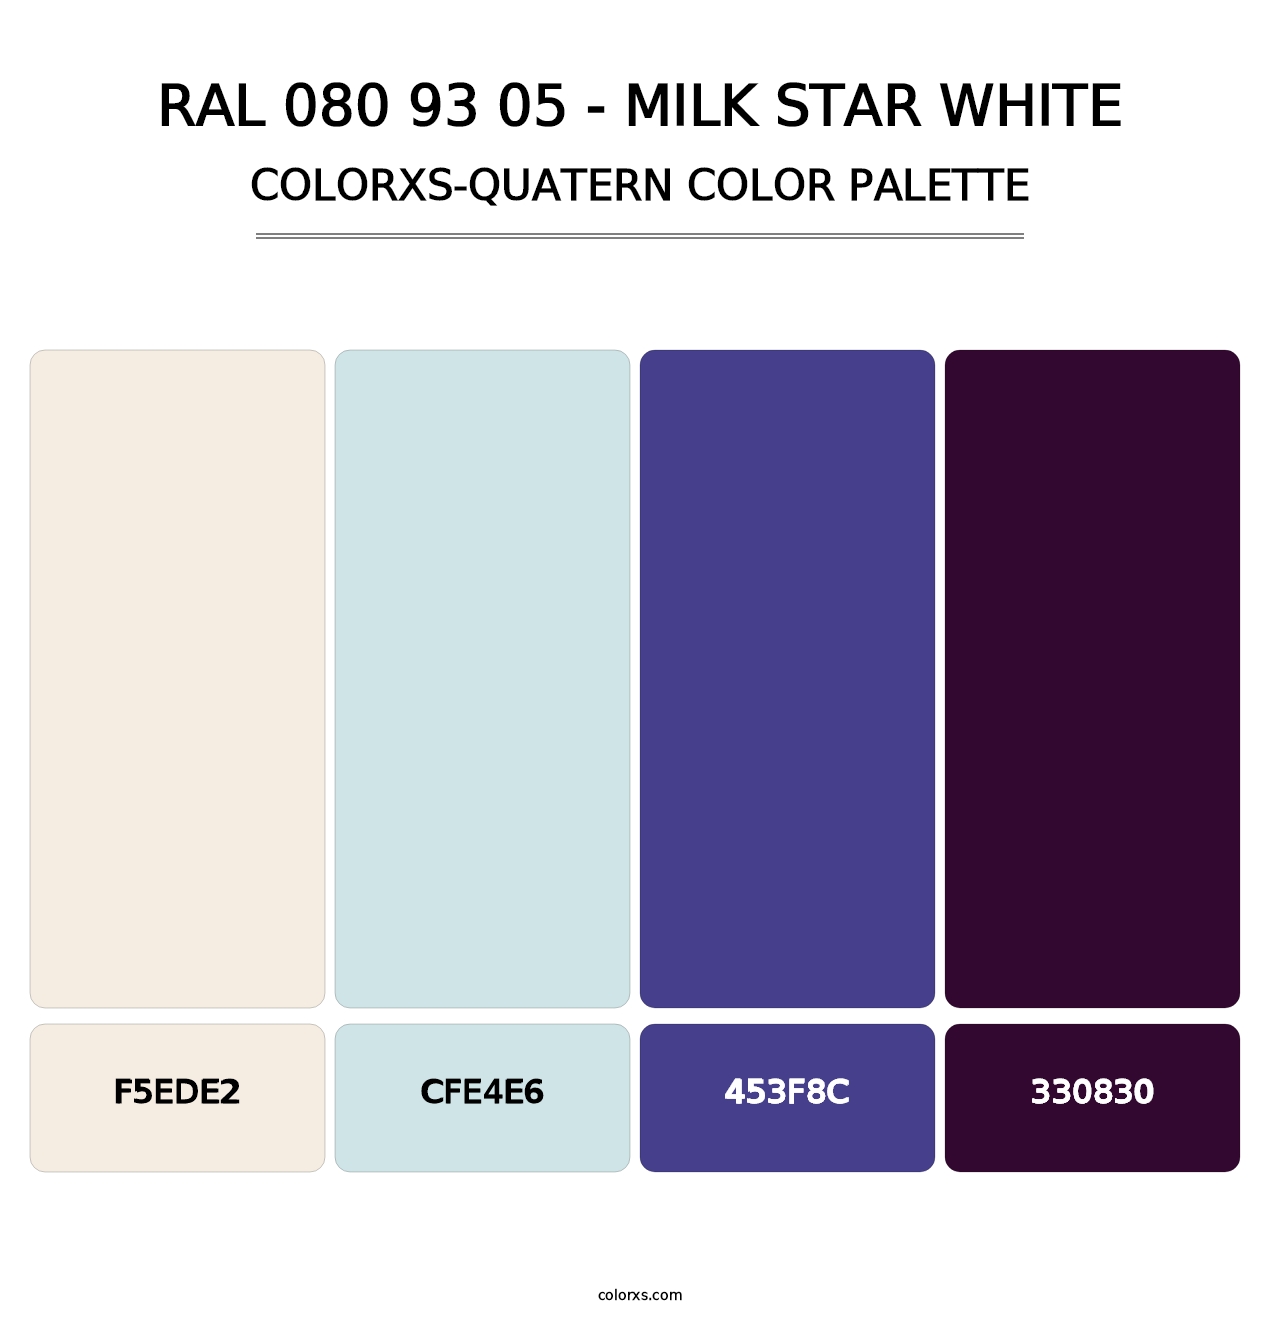 RAL 080 93 05 - Milk Star White - Colorxs Quatern Palette